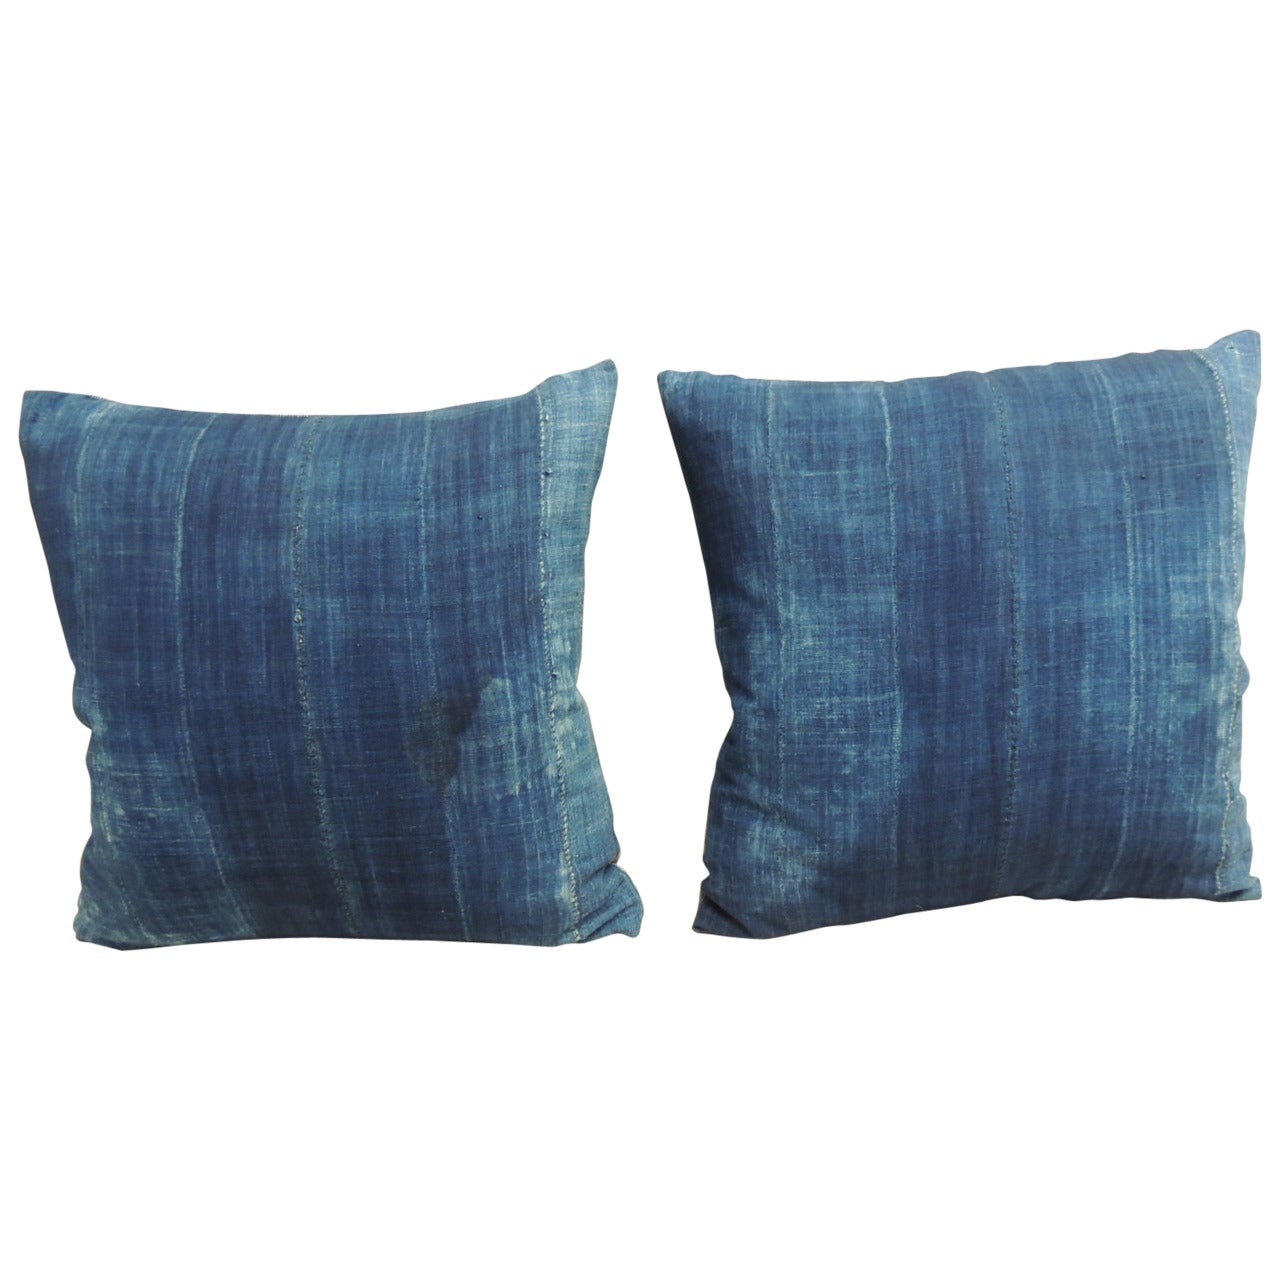 Pair of African Indigo Mud-Cloth Pillows